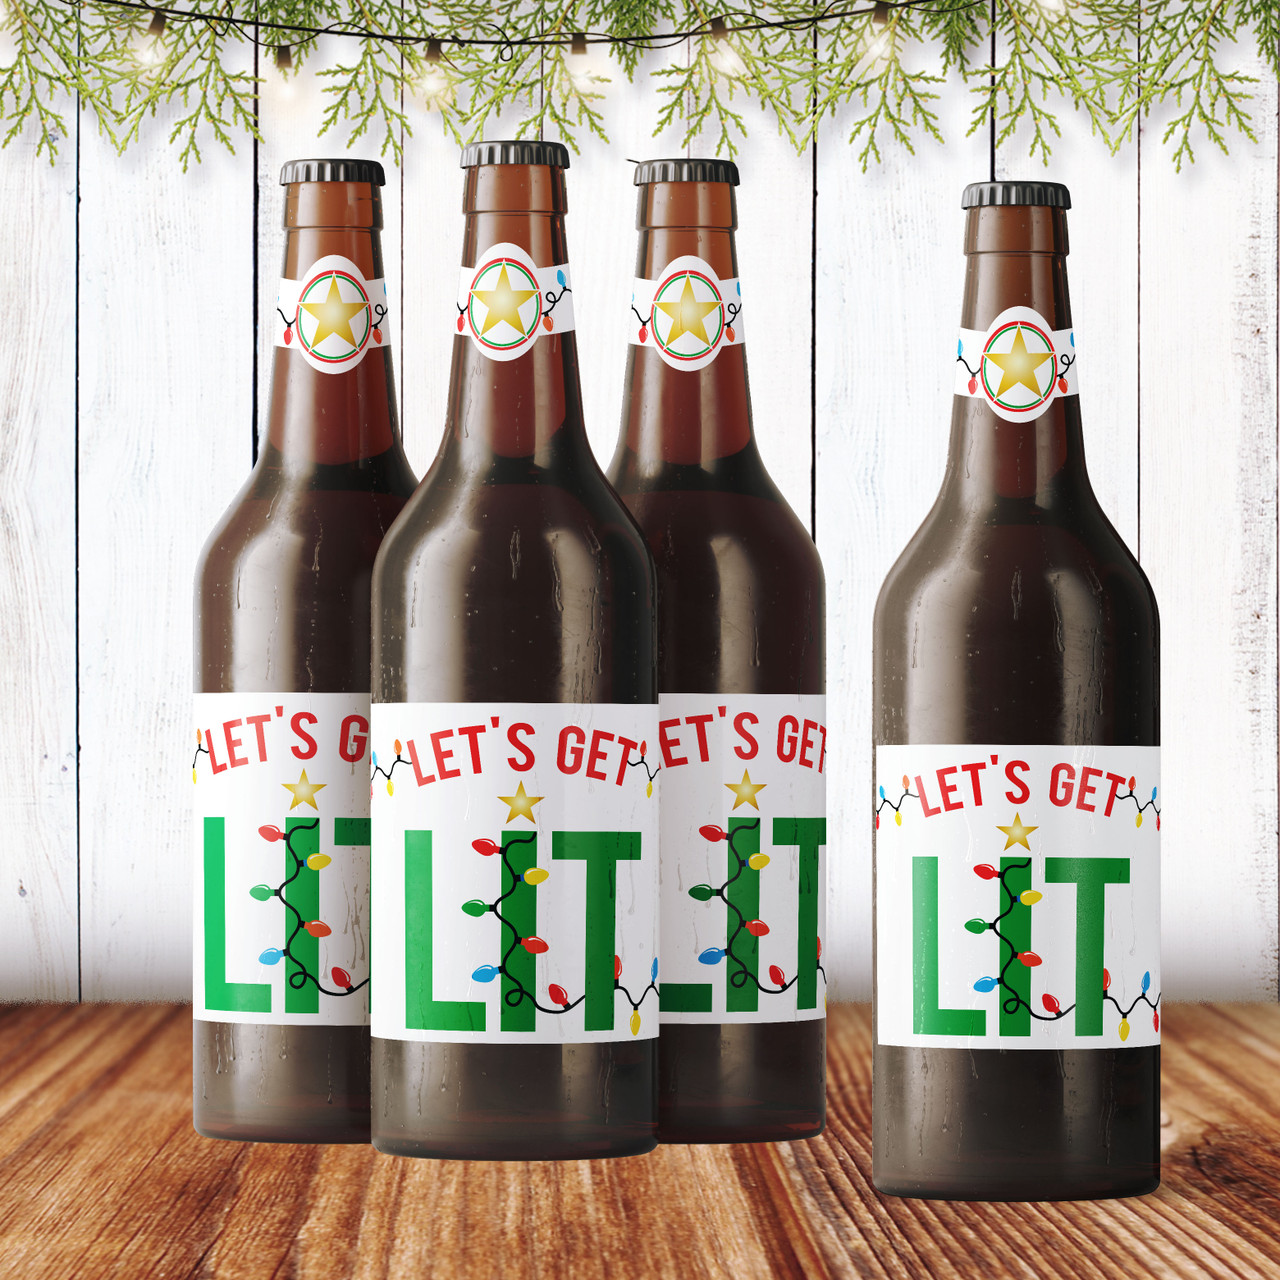 https://cdn11.bigcommerce.com/s-5grzuu6/images/stencil/1280x1280/products/5921/44001/Lets-Get-Lit-Custom_Christmas_Beer-Bottle_Labels__59338.1635976052.jpg?c=2